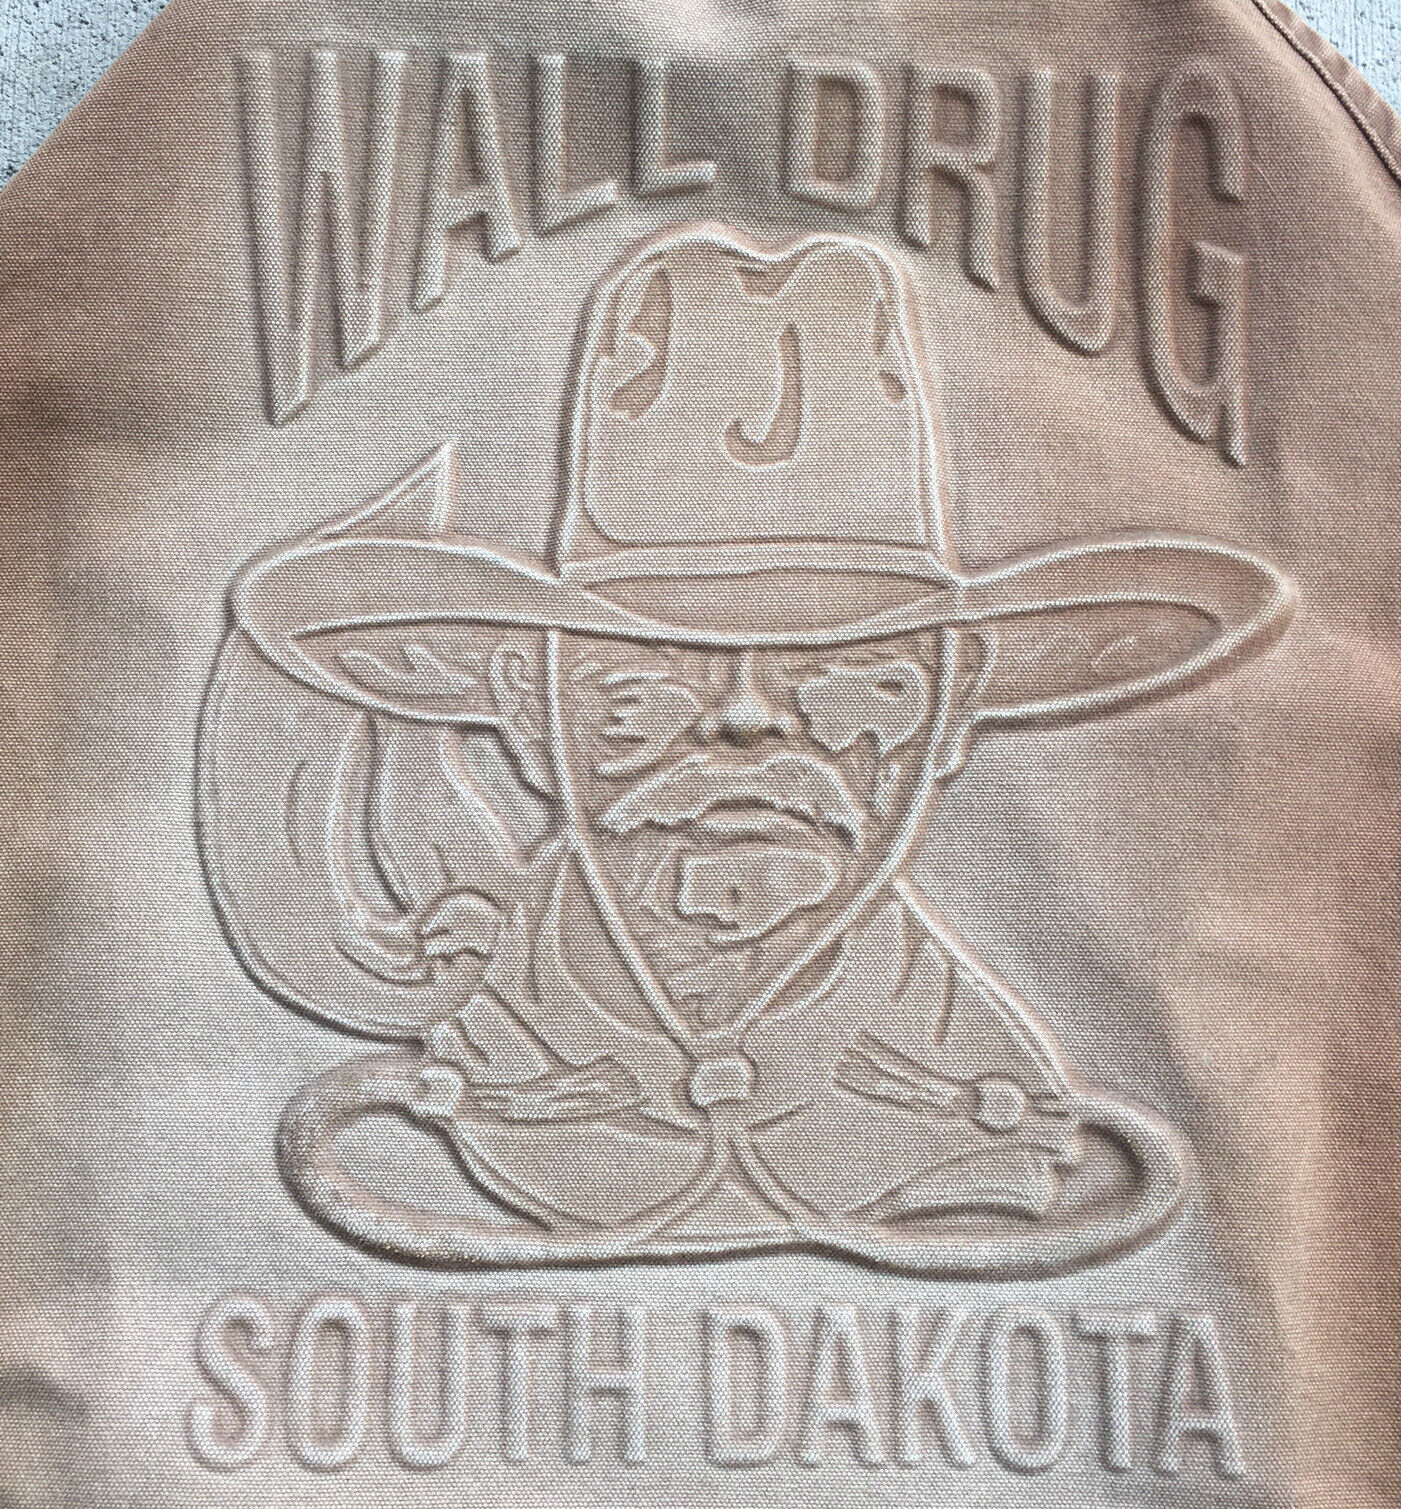 VTG Master Chef Heavy Duty Apron Wall Drug South Dakota Very Rare Made In USA M